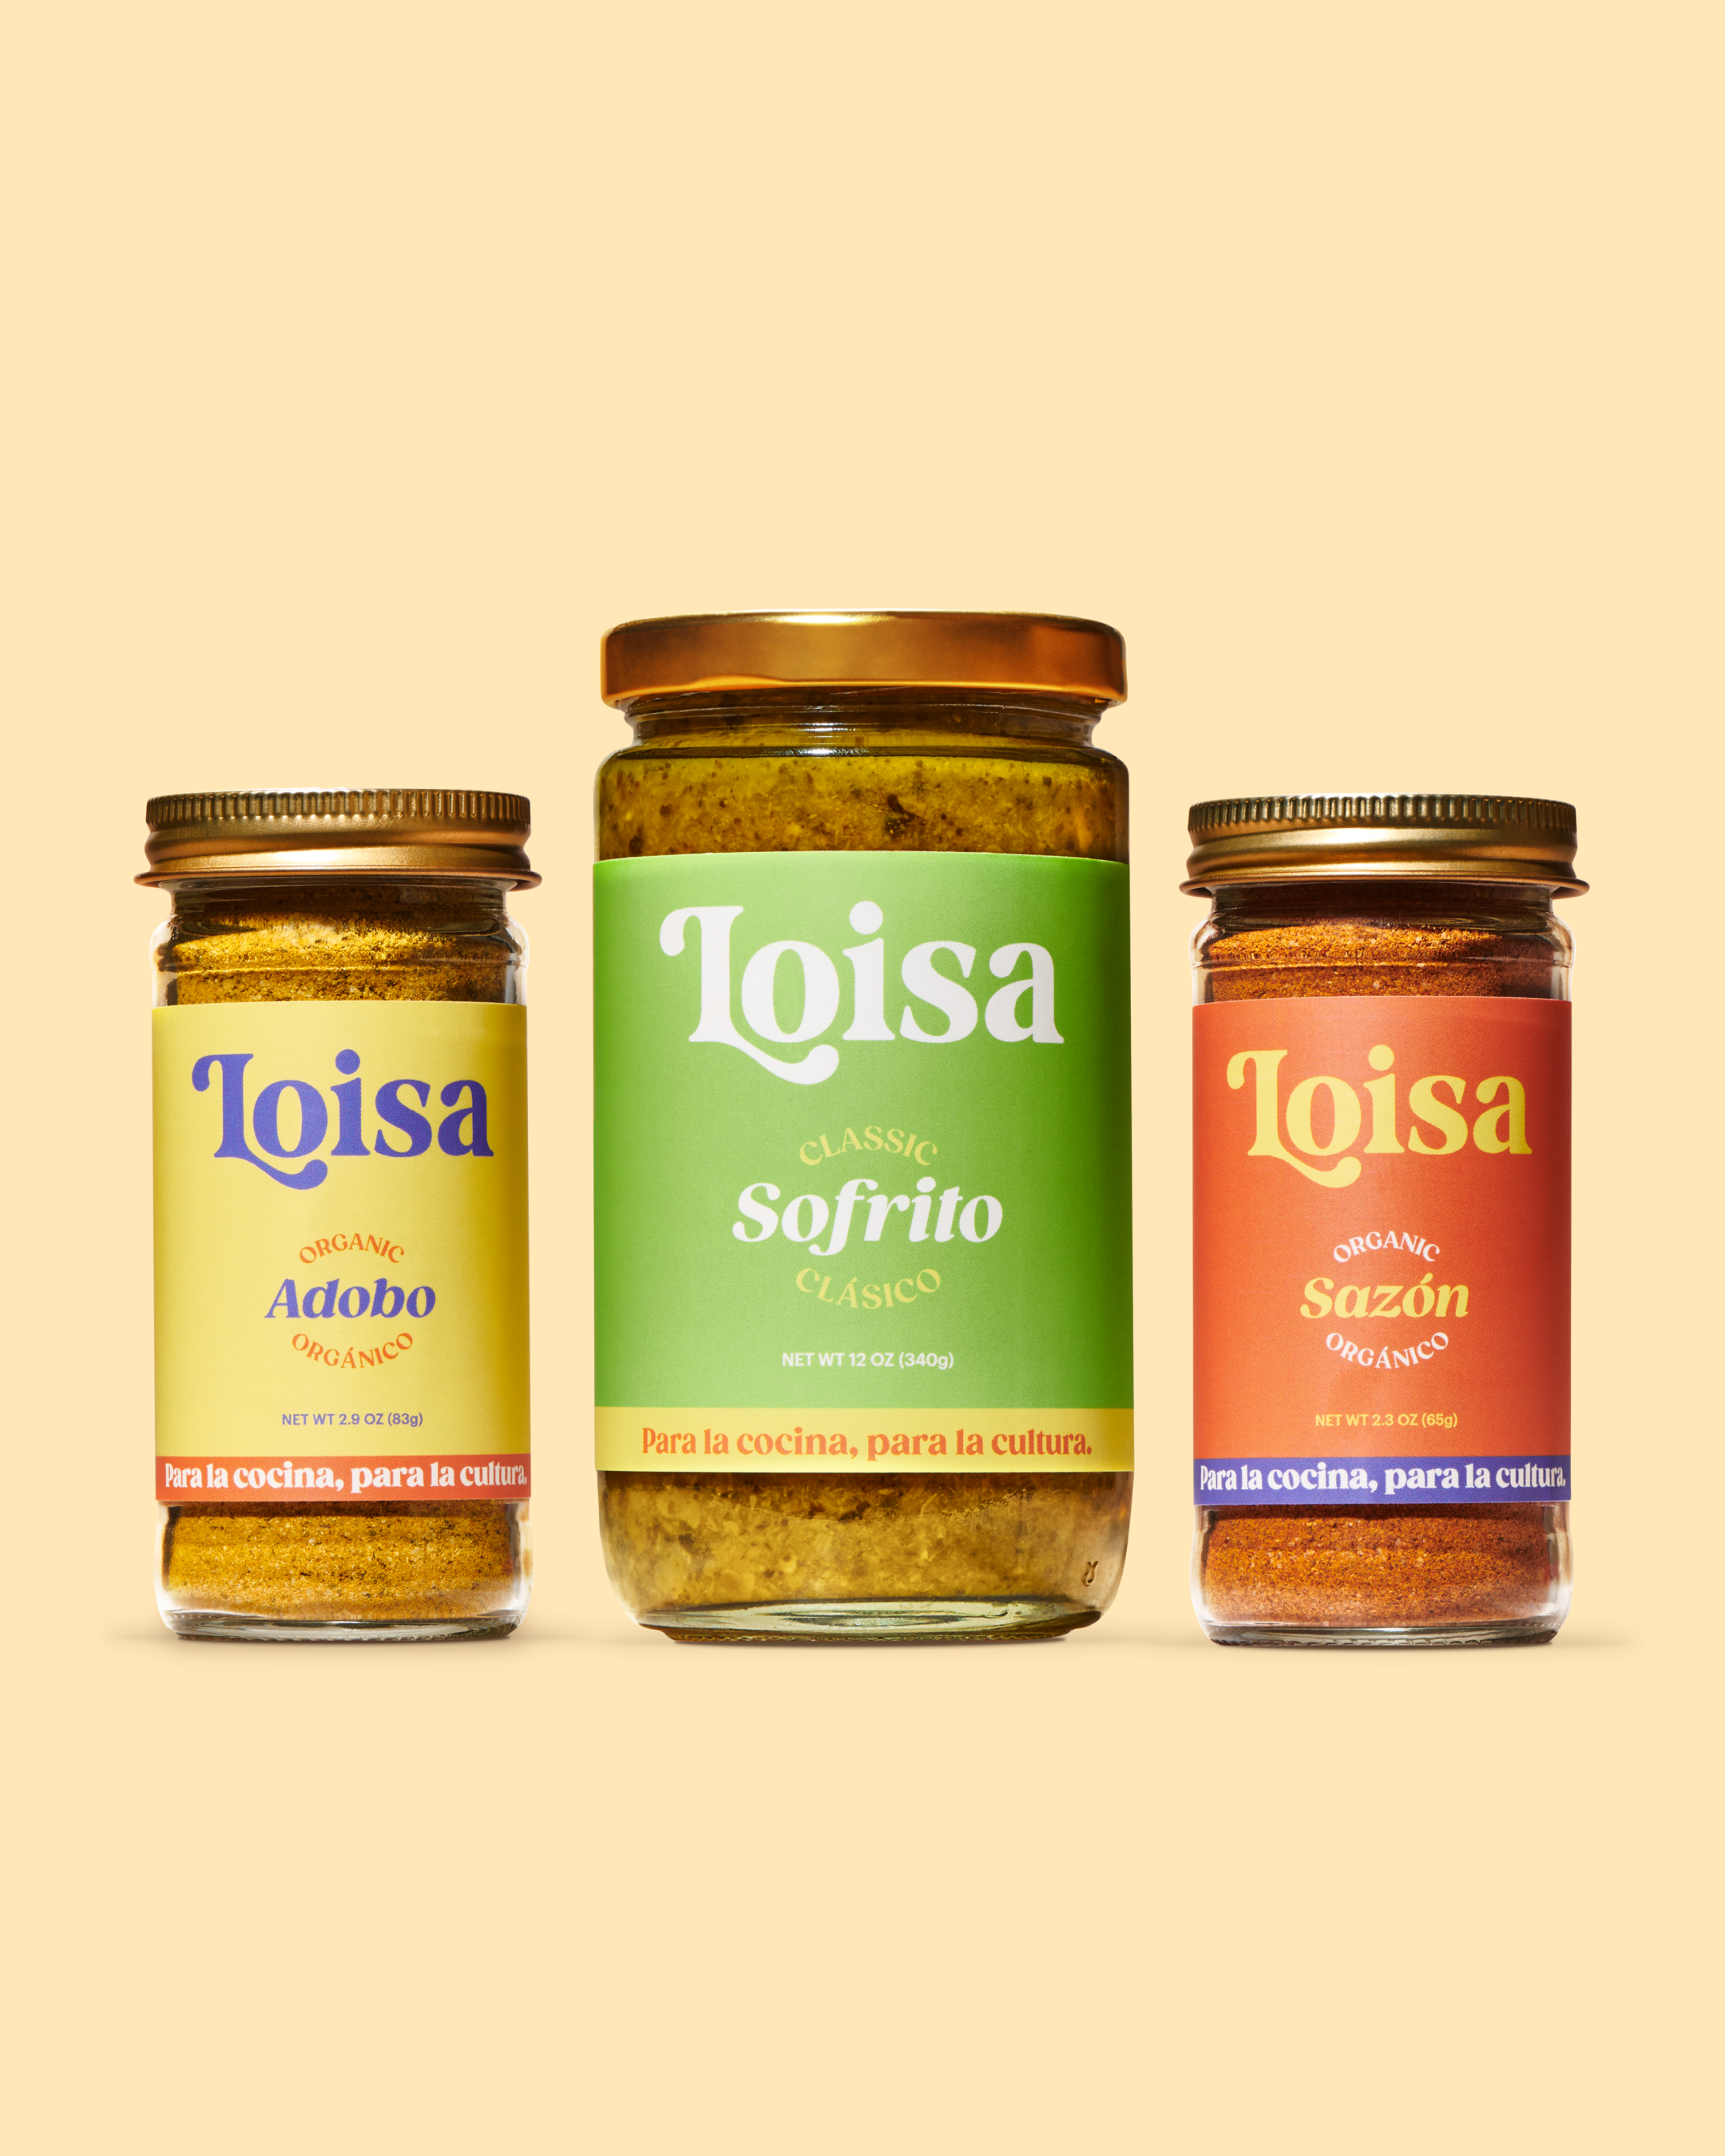 Loisa | Durable Tostonera Plantain Smasher or Press | Kitchenware for Tostones | Latin Cooking Utensil | Green Tostonera